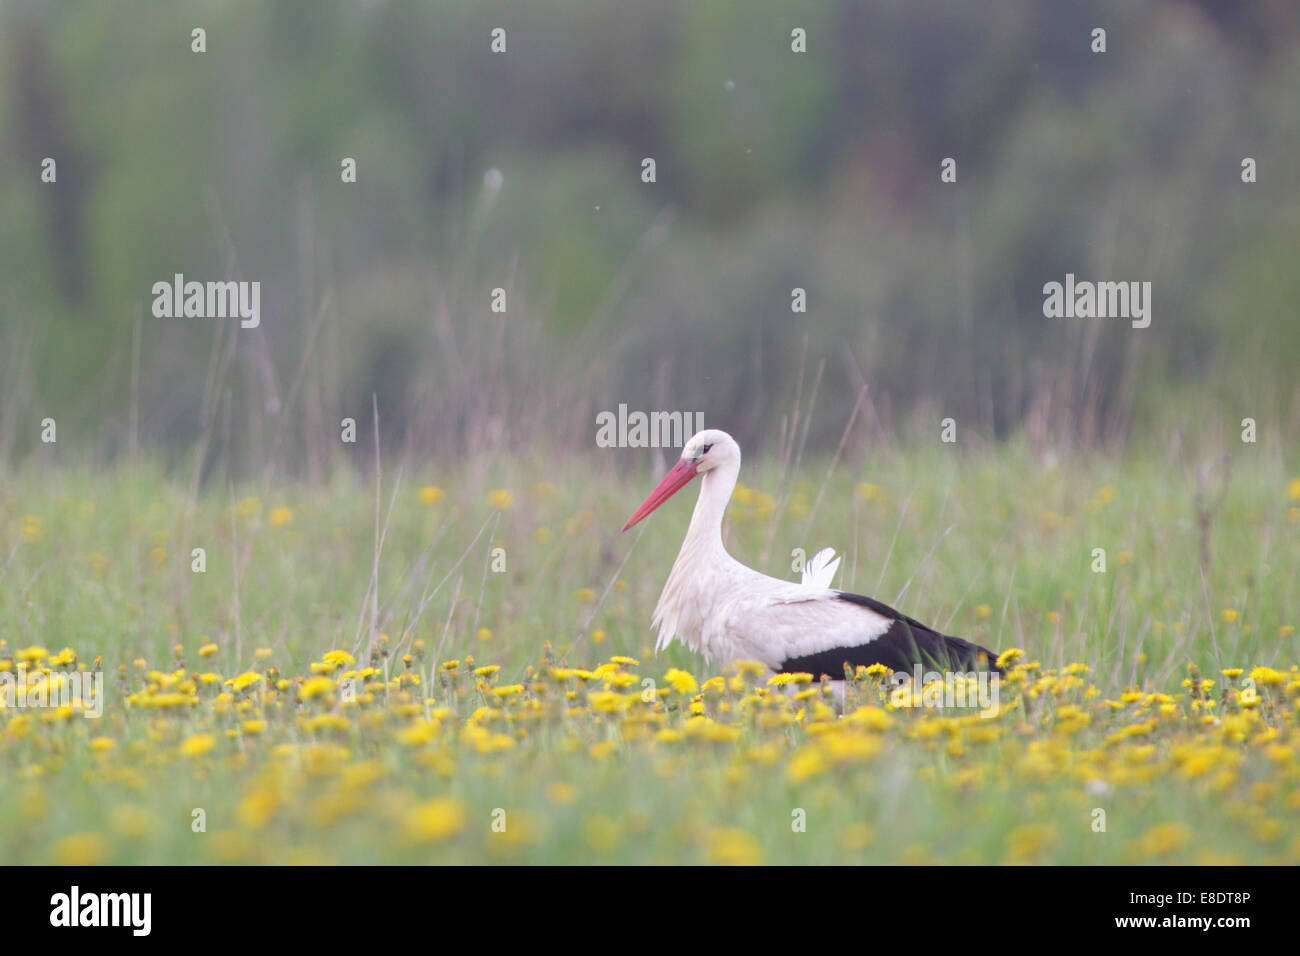 White Stork (Ciconia ciconia) in flower (Dandelion, Taraxacum officinale) field. Europe Stock Photo